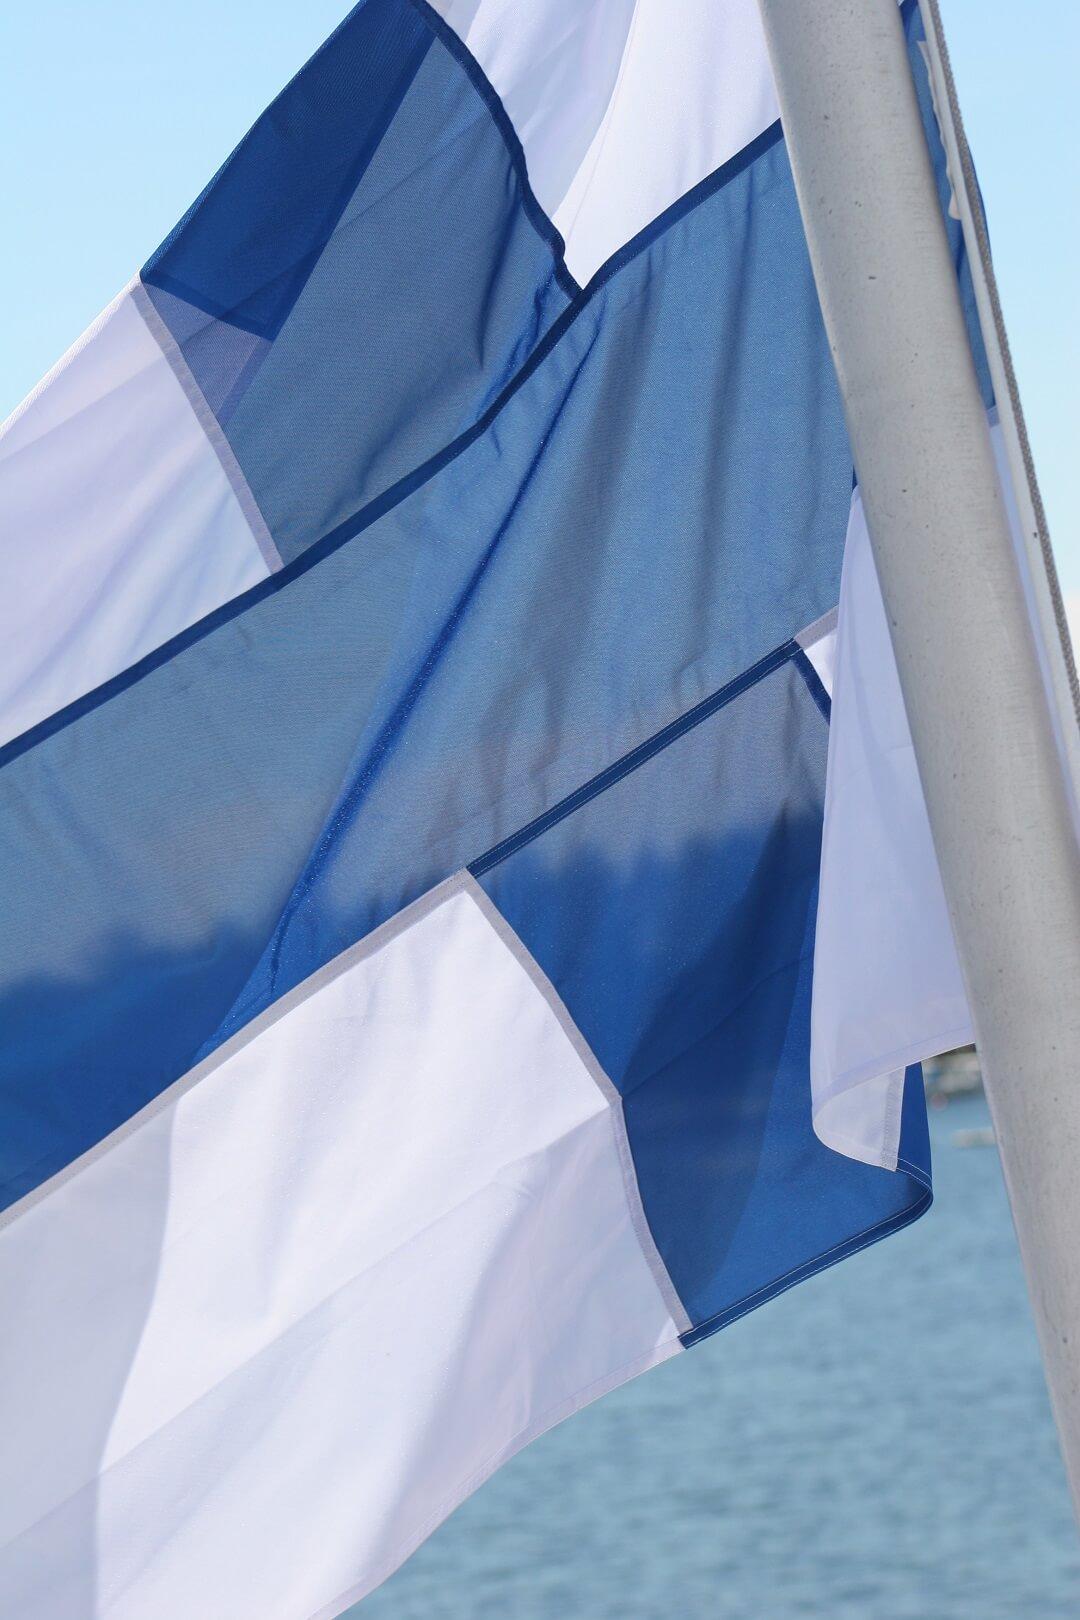 Suomen lippu, eli siniristilippu